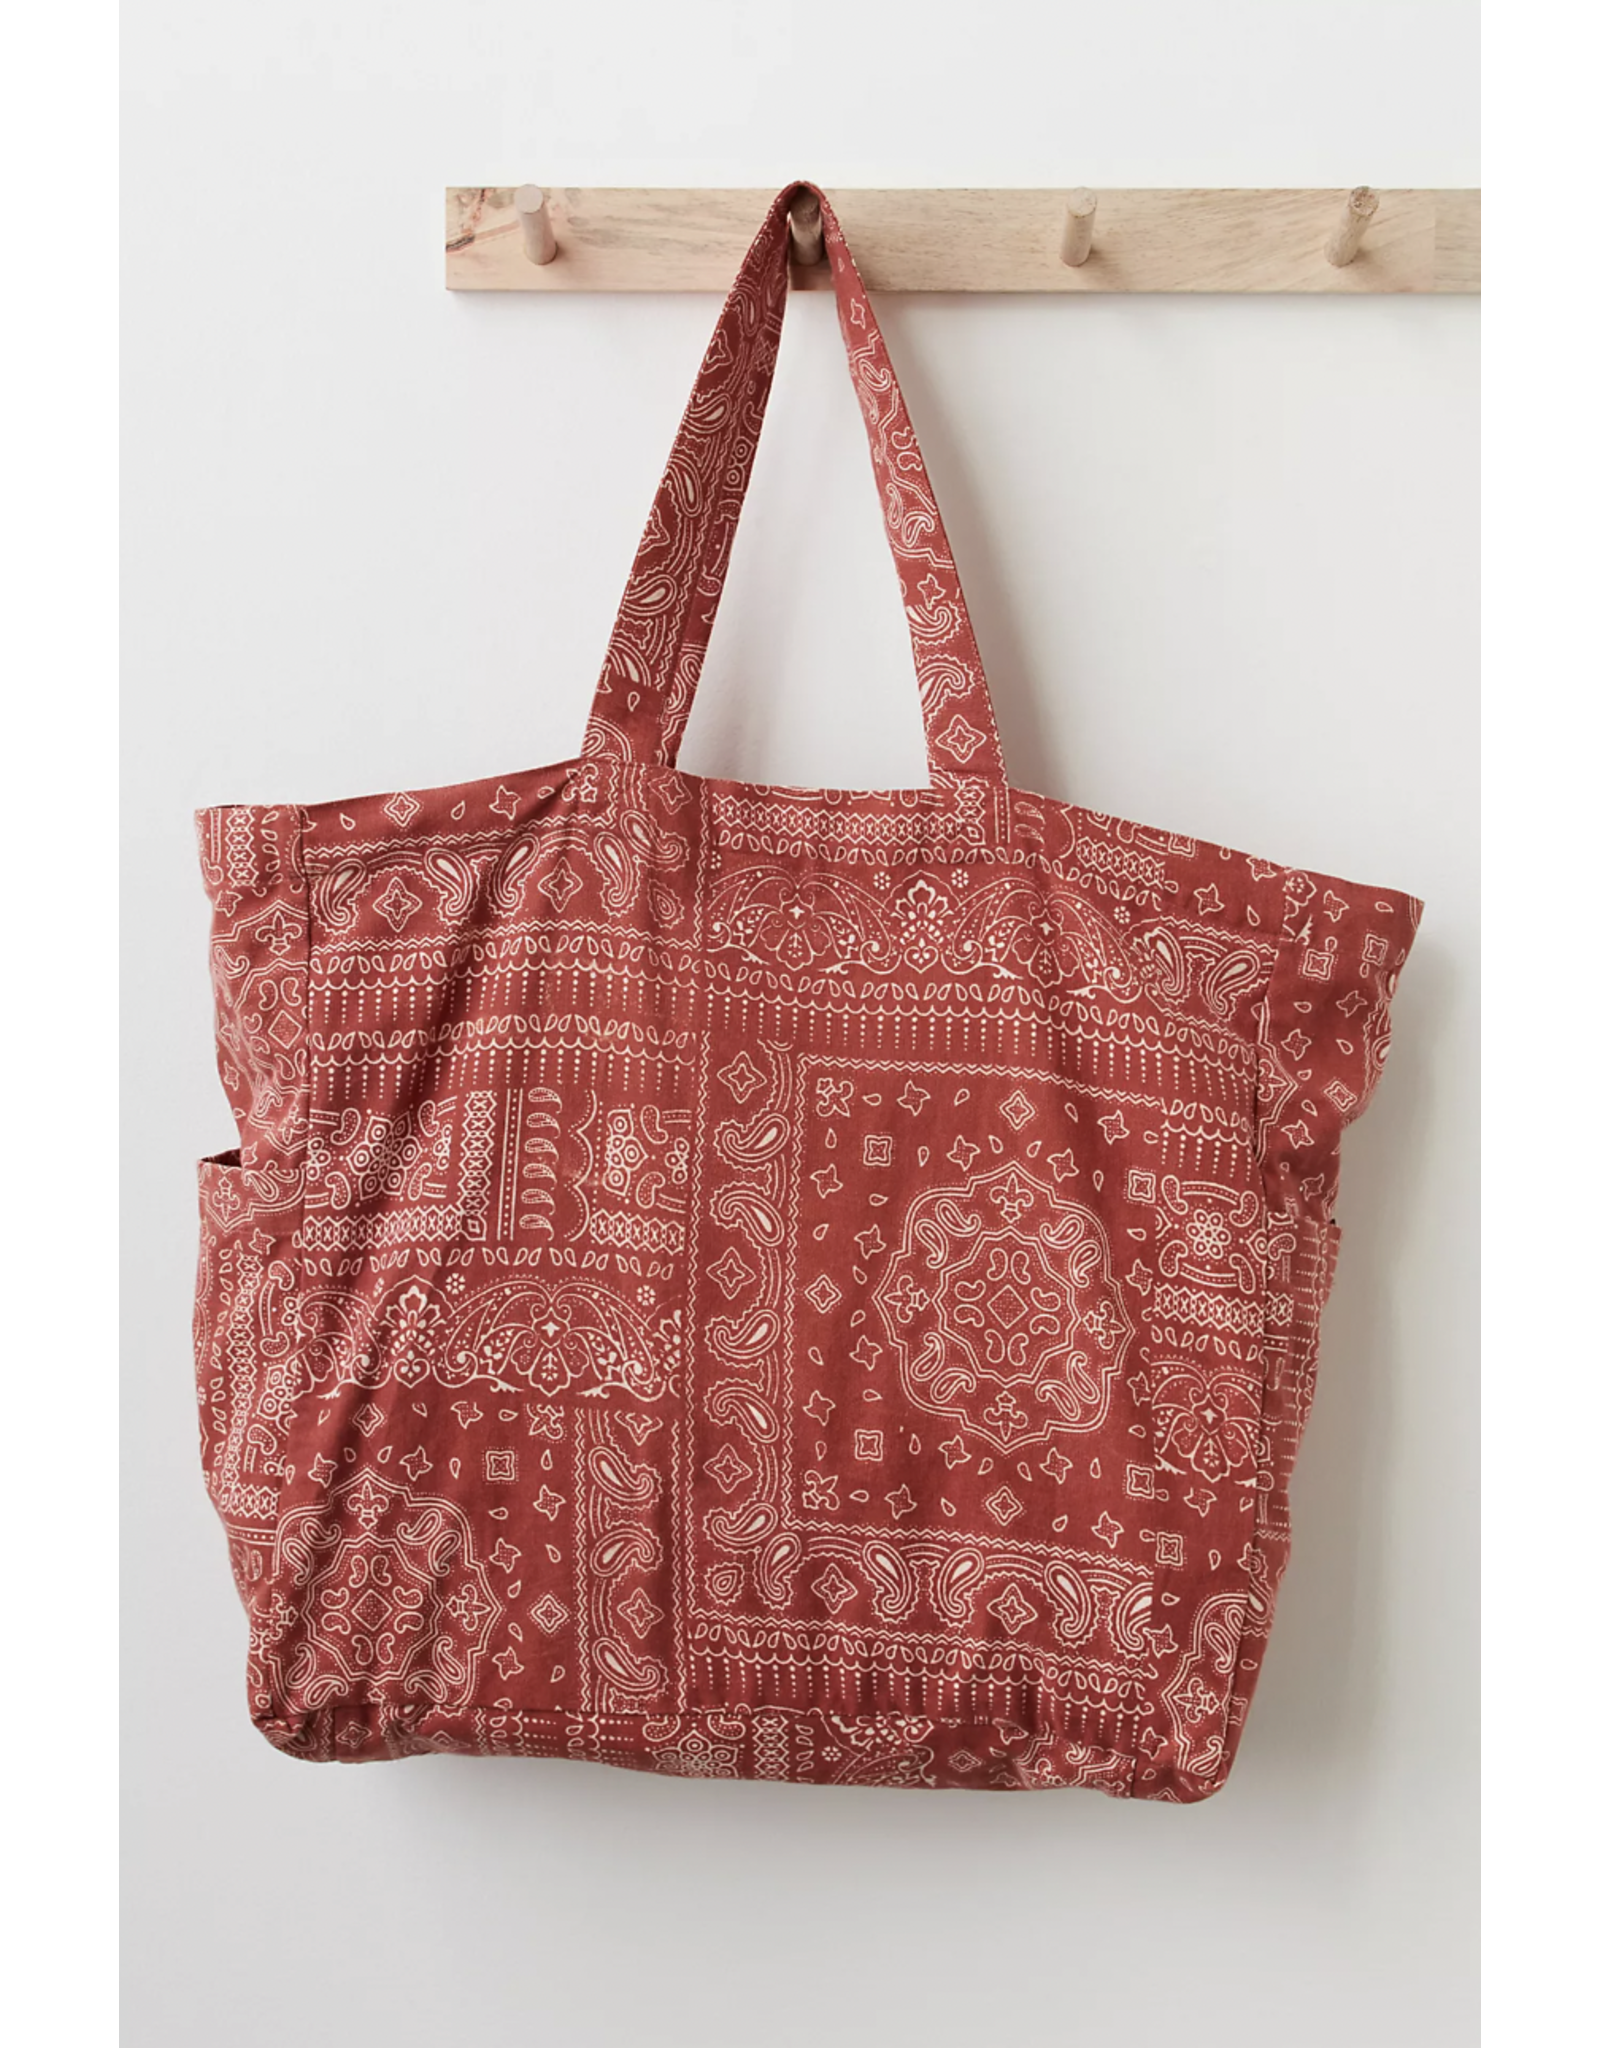 always radiate love organic canvas tote bag , inspirational printed de –  Vedikahstudios